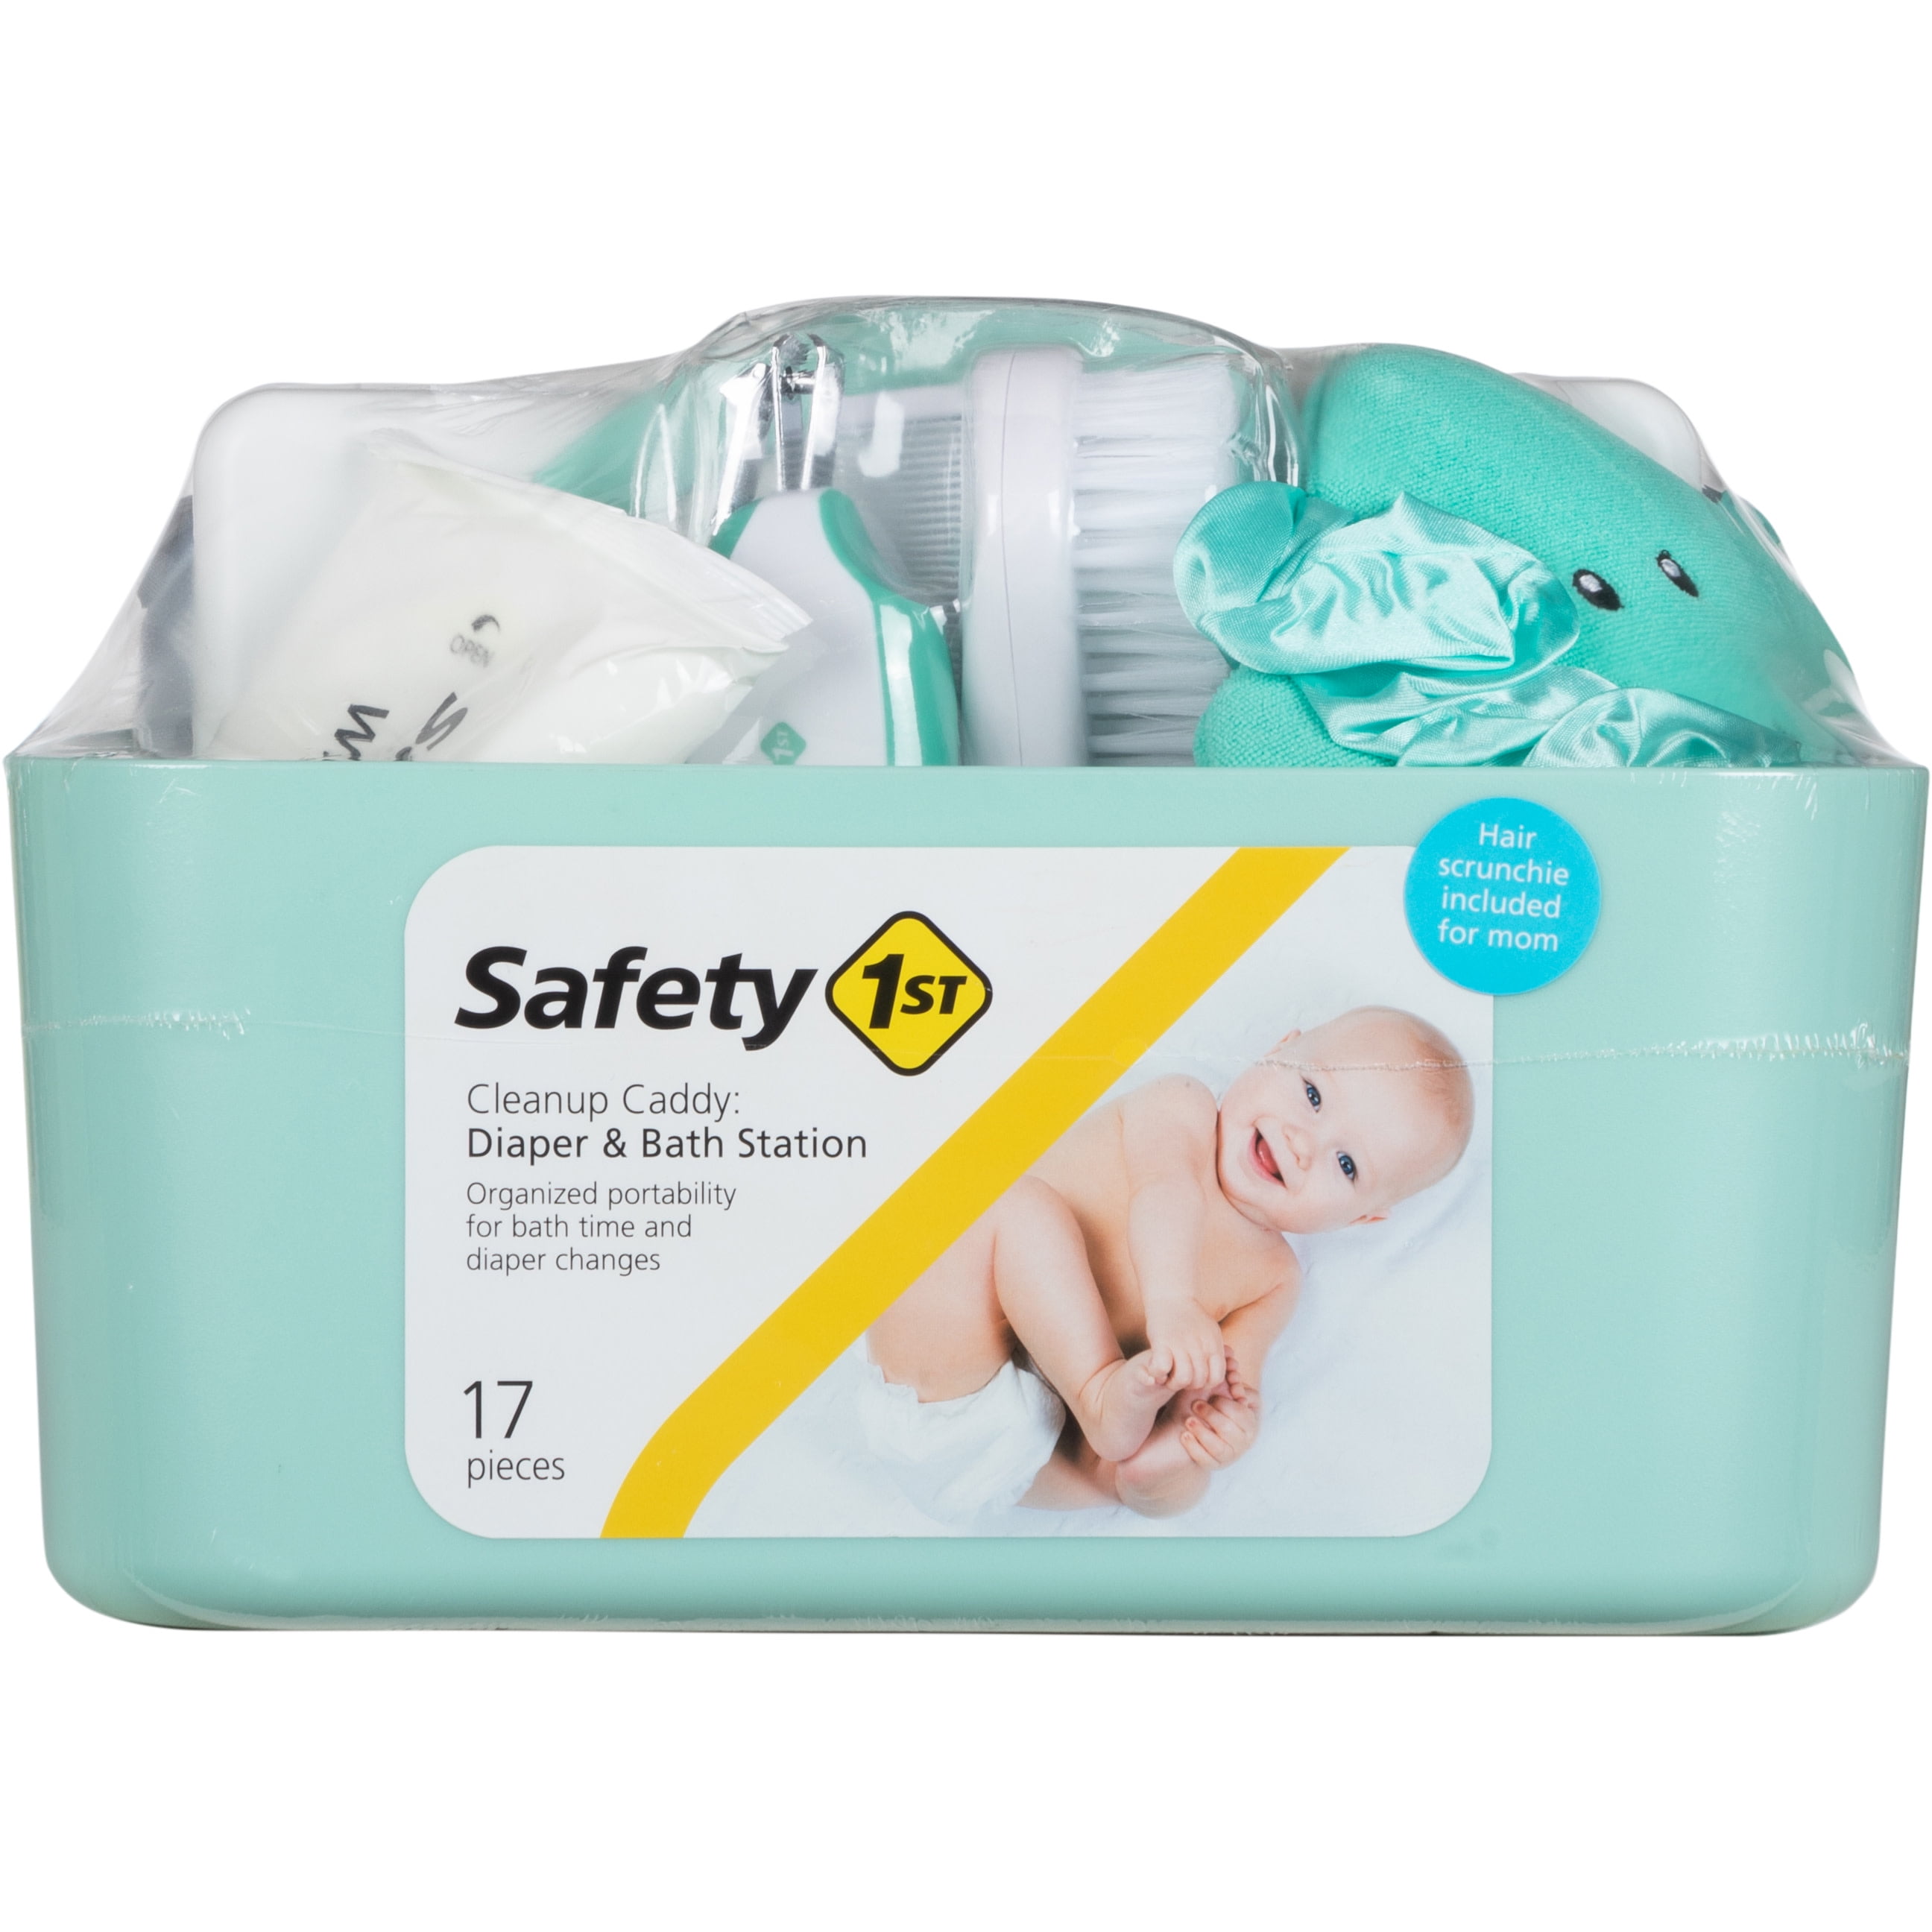 Safety 1ˢᵗ Cleanup Caddy: Diaper & Bath Station, Seafoam